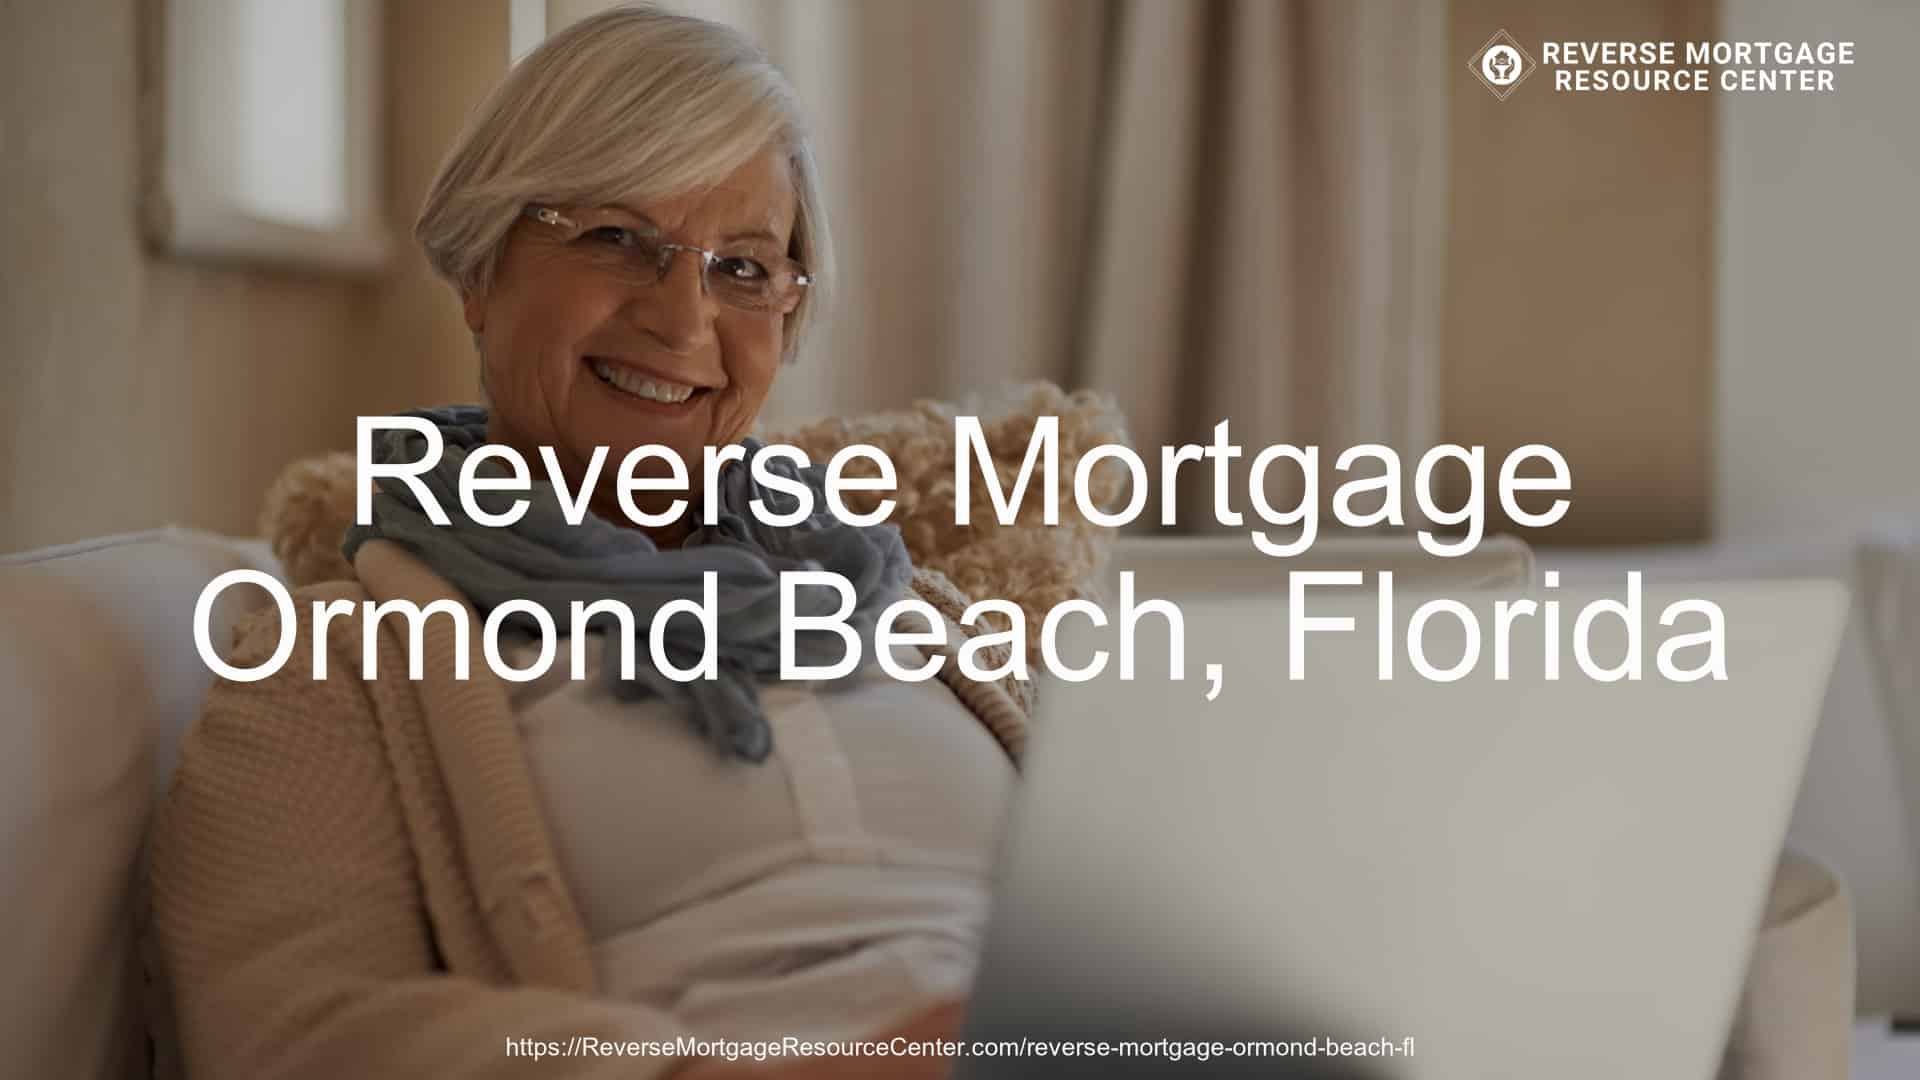 Reverse Mortgage Loans in Ormond Beach Florida